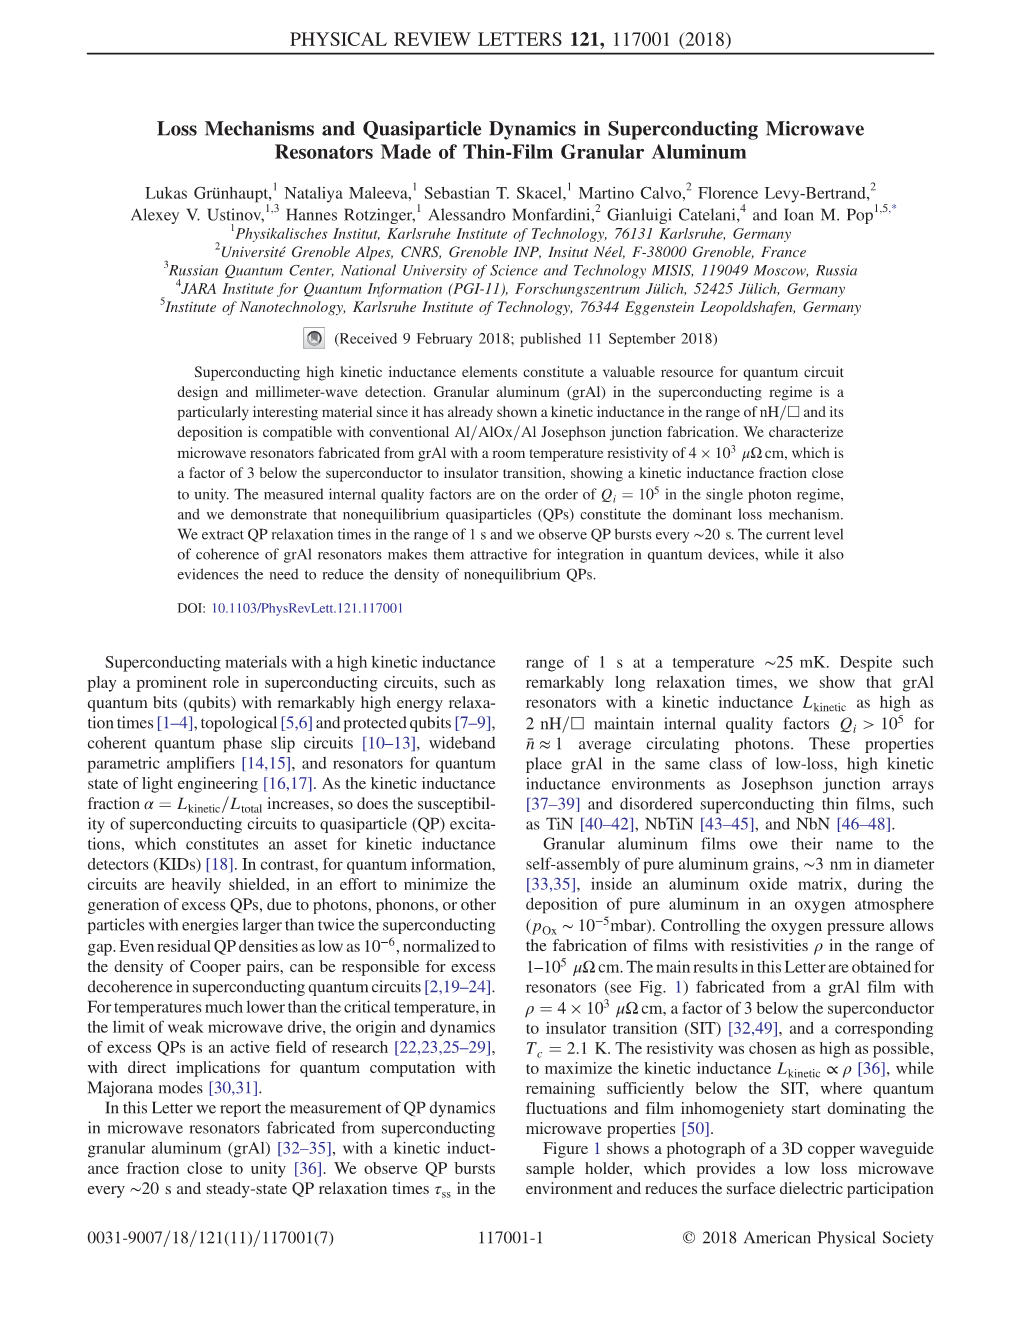 Loss Mechanisms and Quasiparticle Dynamics in Superconducting Microwave Resonators Made of Thin-Film Granular Aluminum